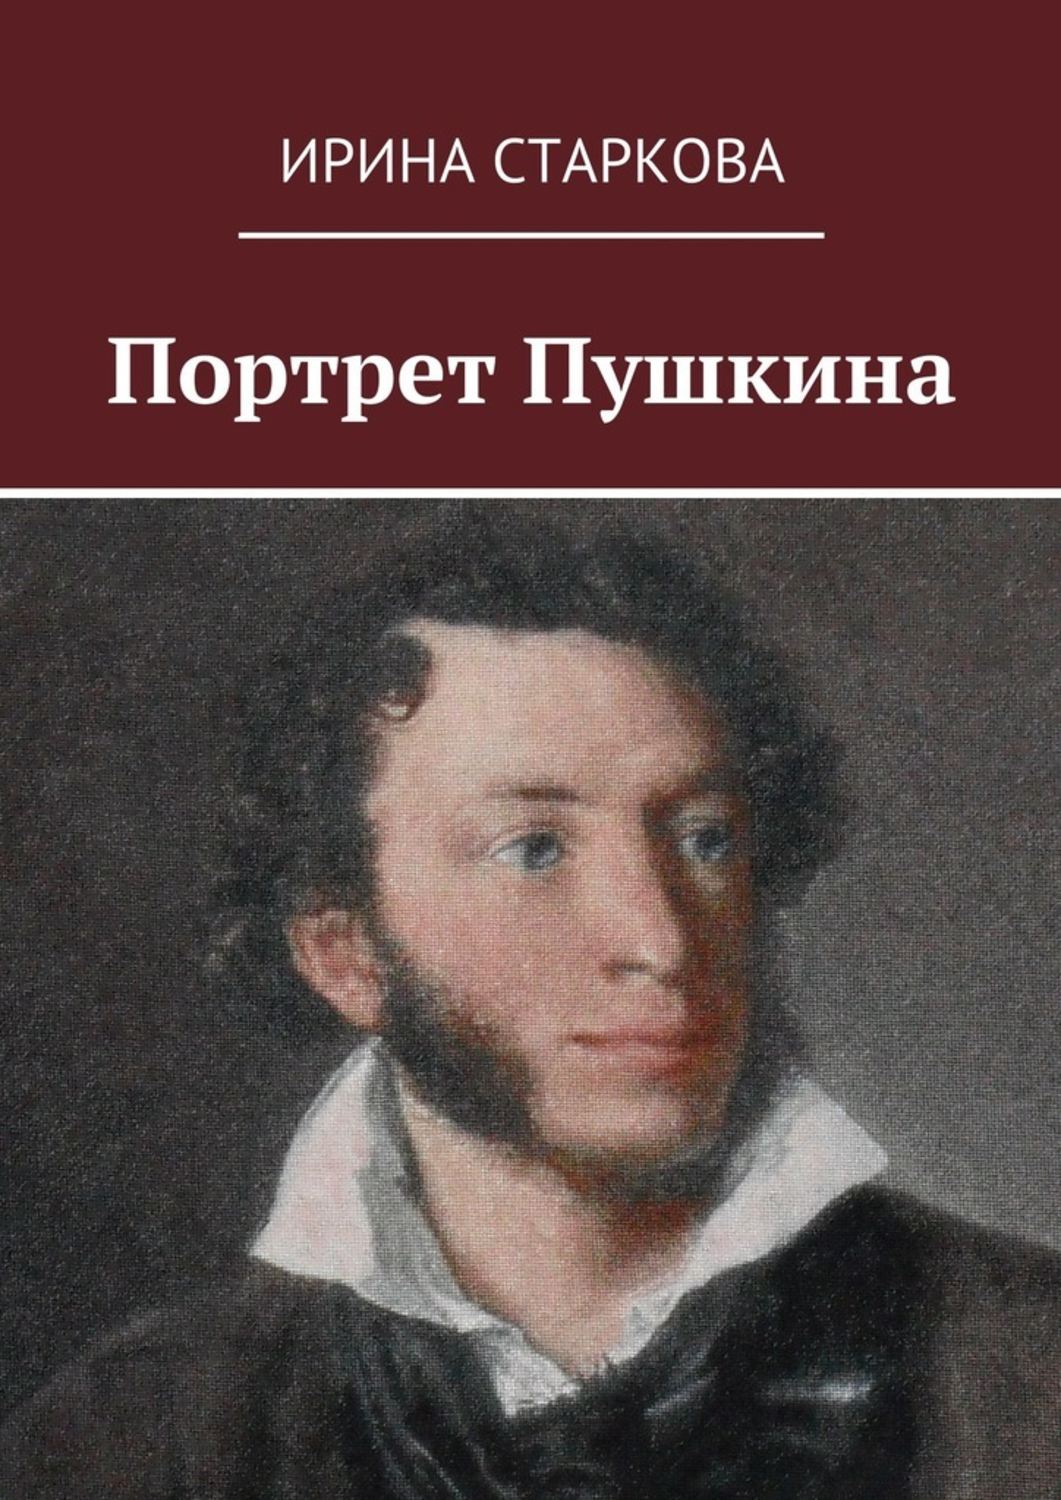 Портрет Пушкина с книгой